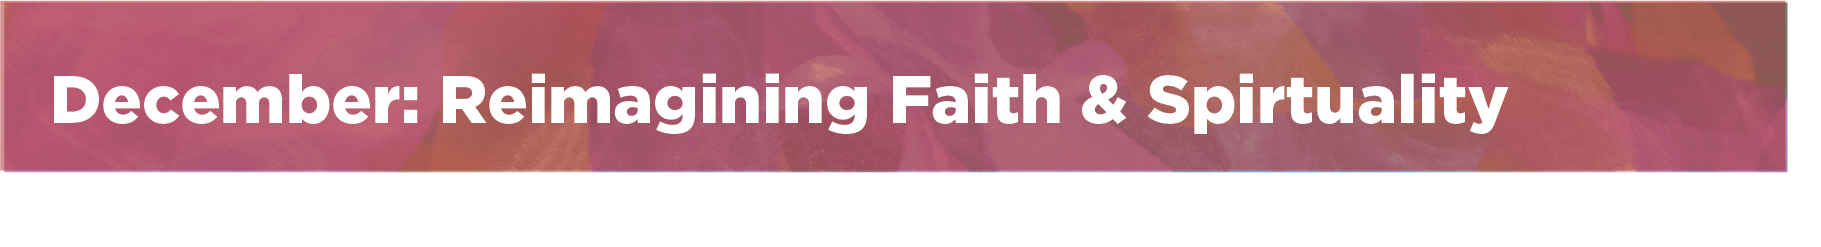 December: Reimagining Faith & Spirtuality